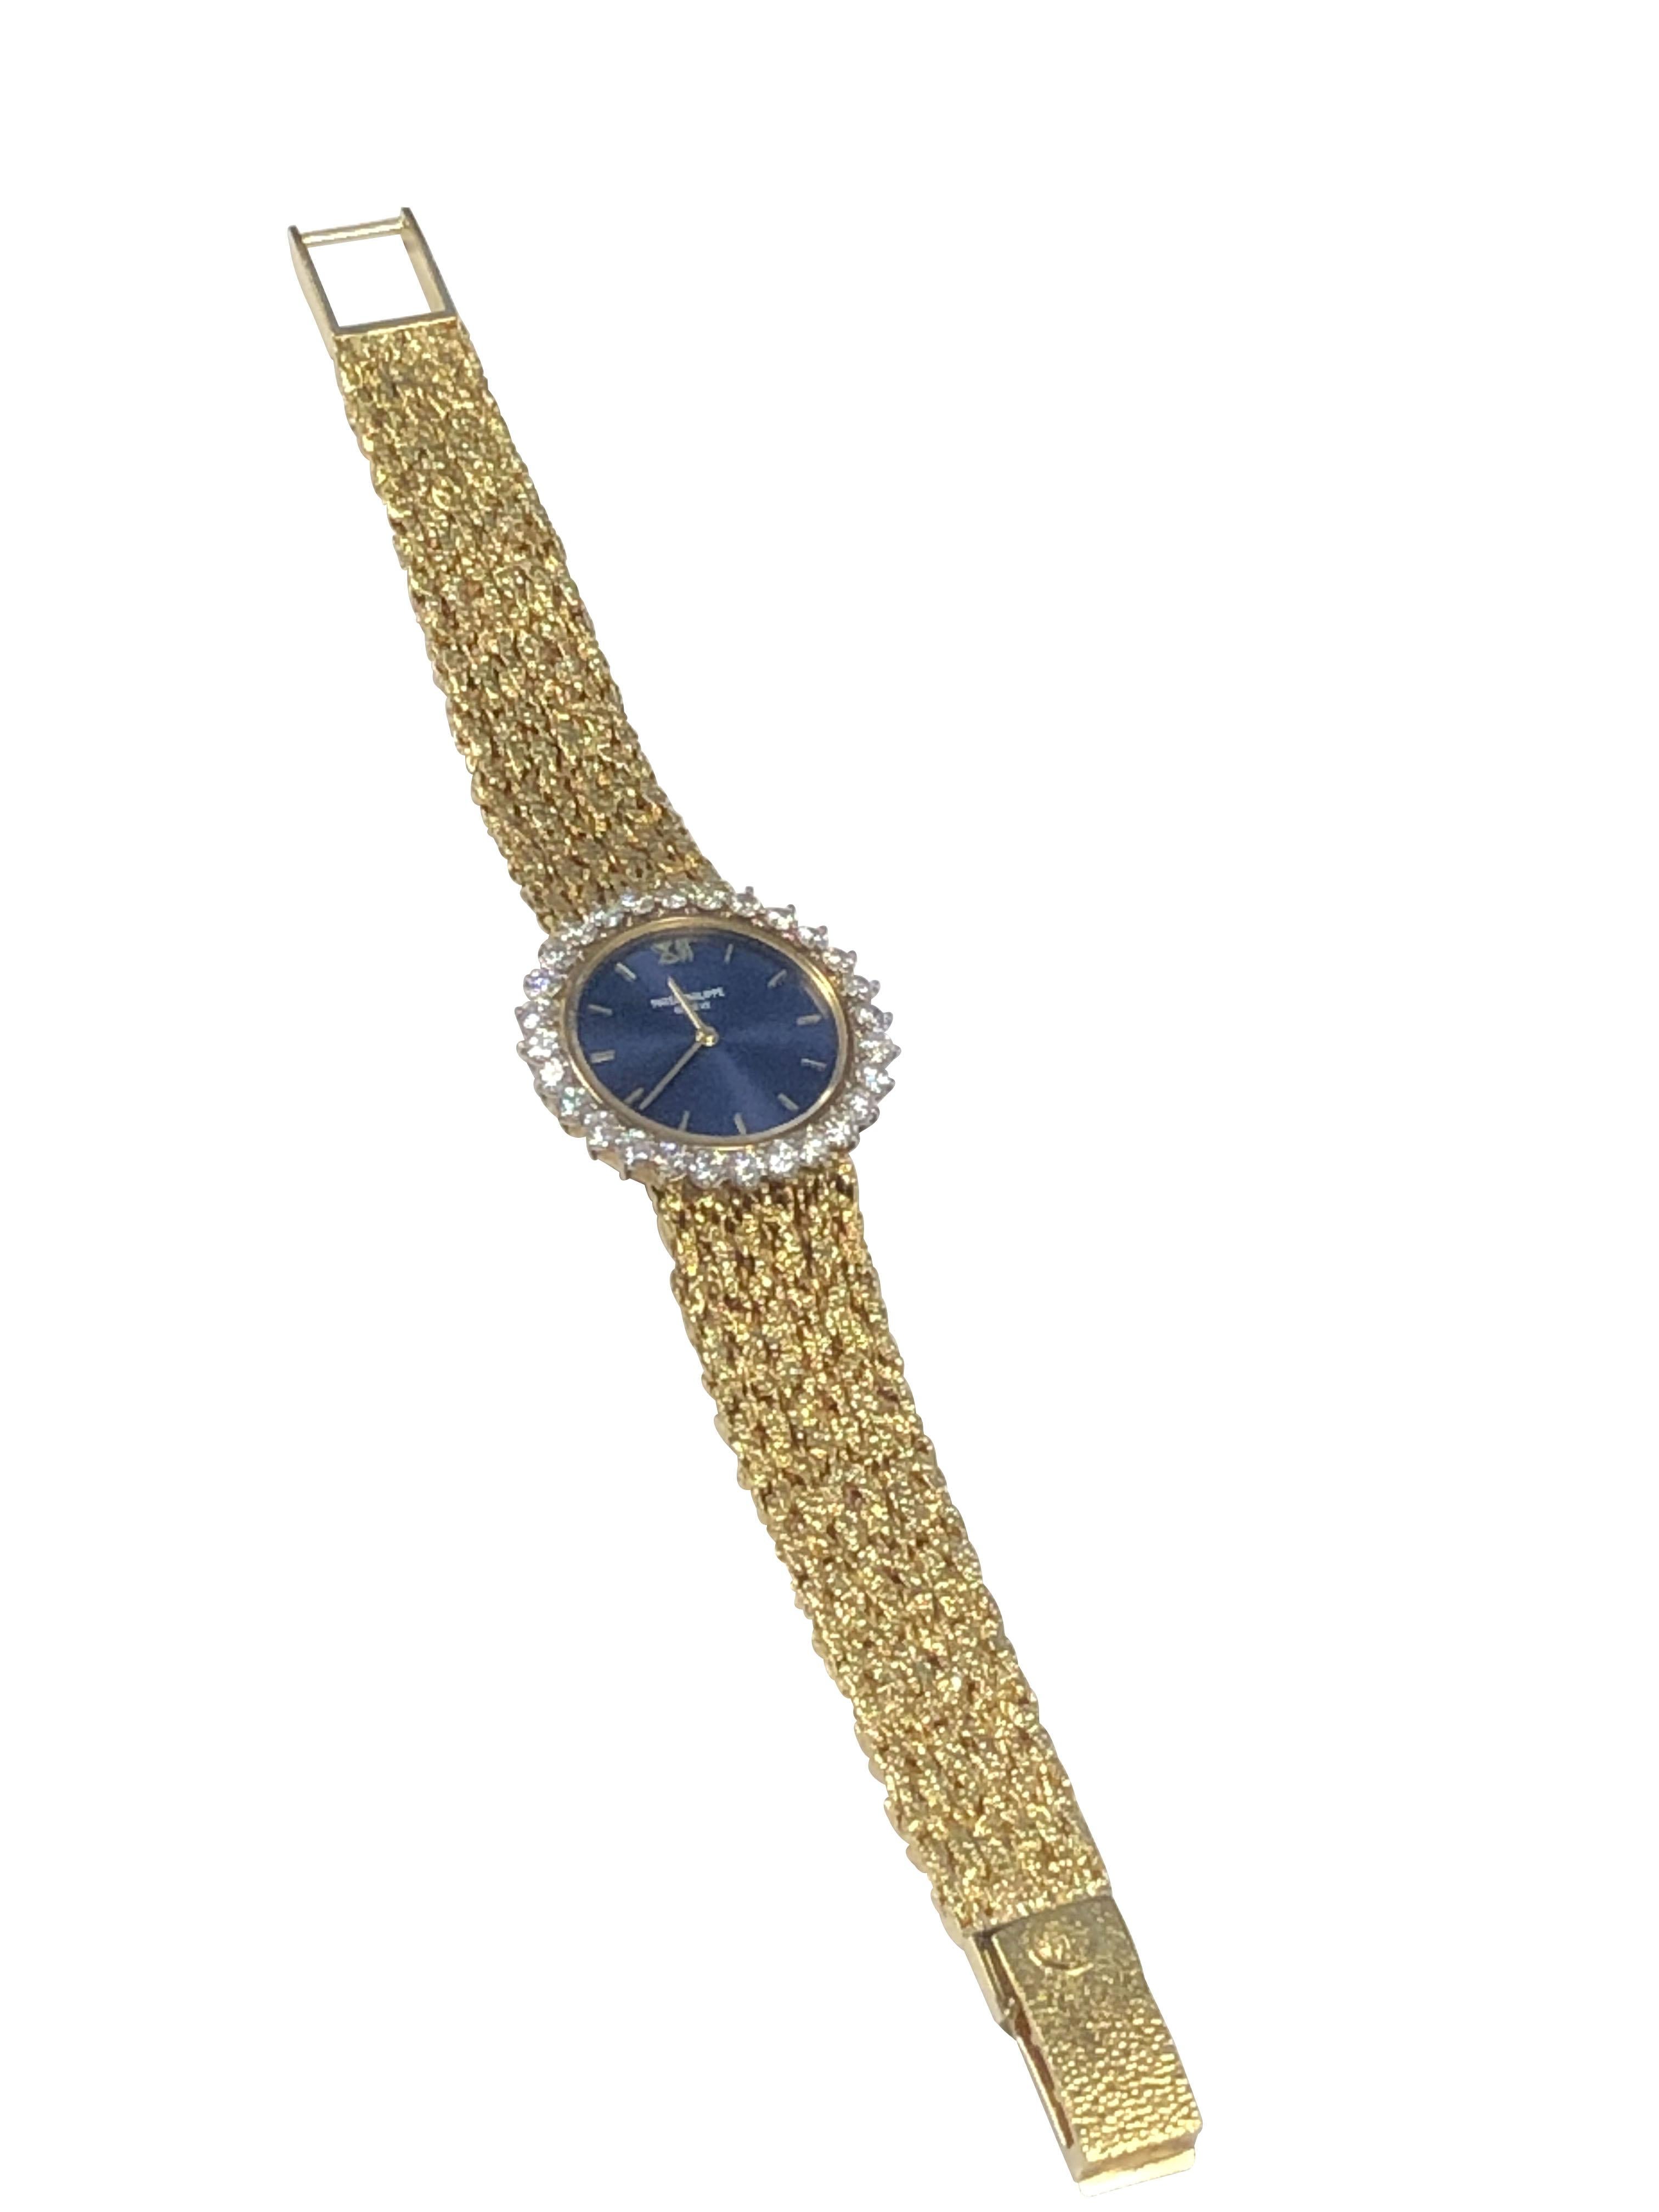 Women's Patek Philippe Gold and Diamonds Ladies Mechanical Wrist Watch